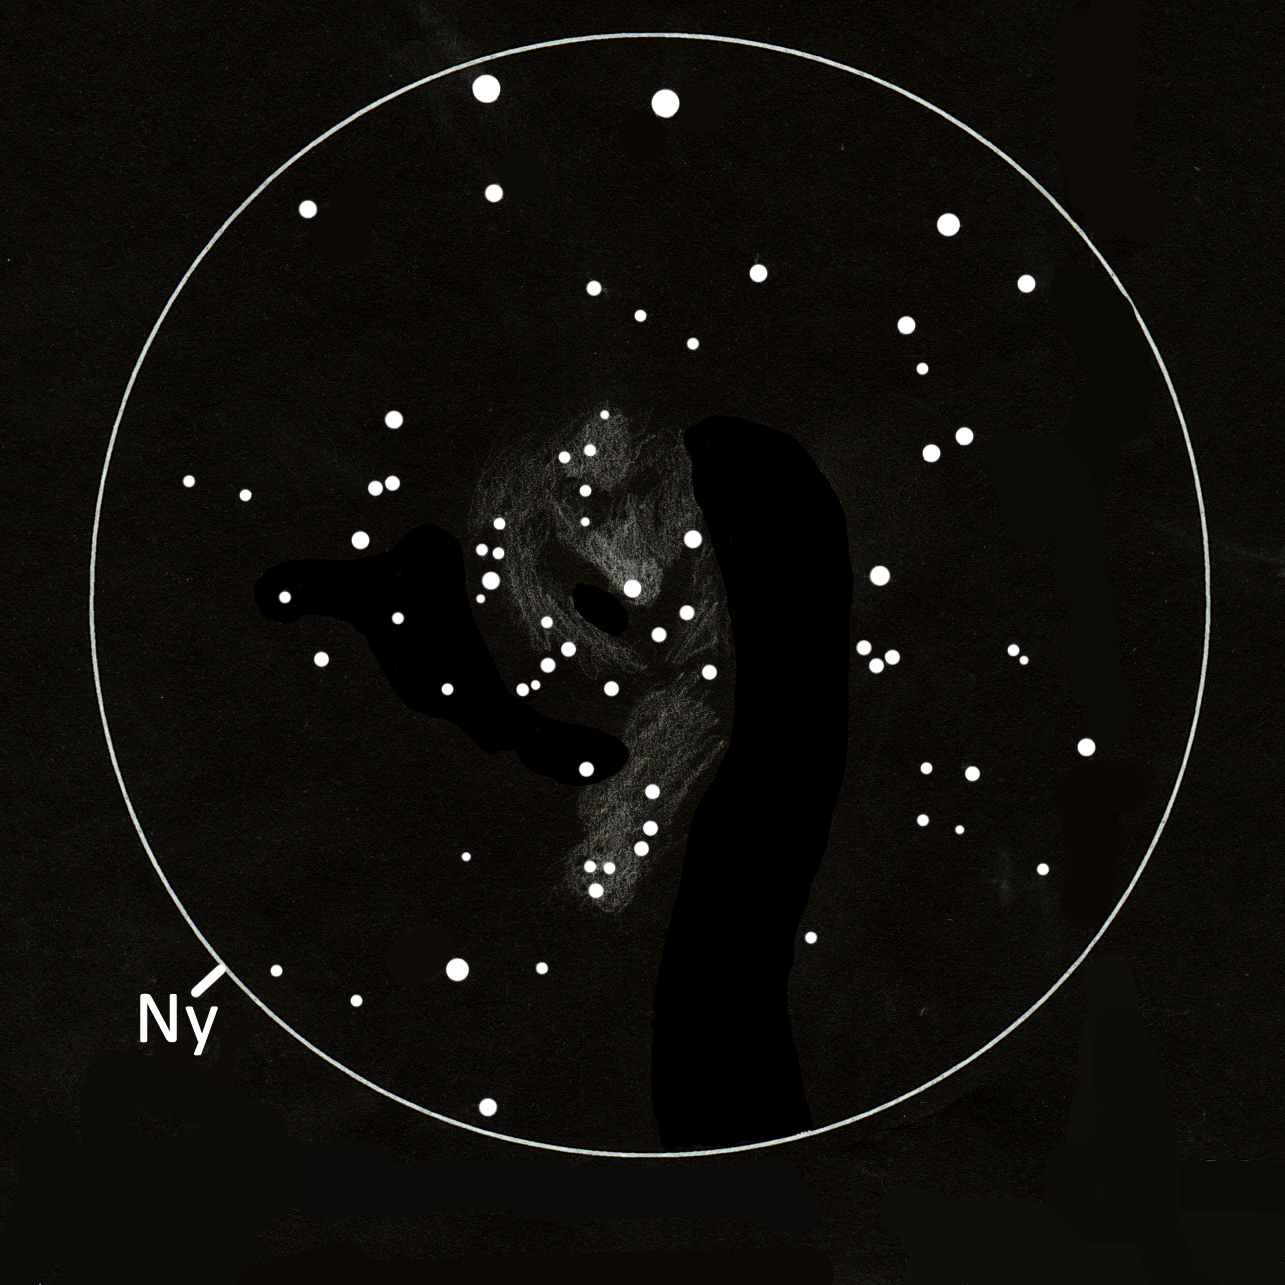 IC 5146, VdB 147 DF, B168 SK, Cr 470 NY (Cyg)